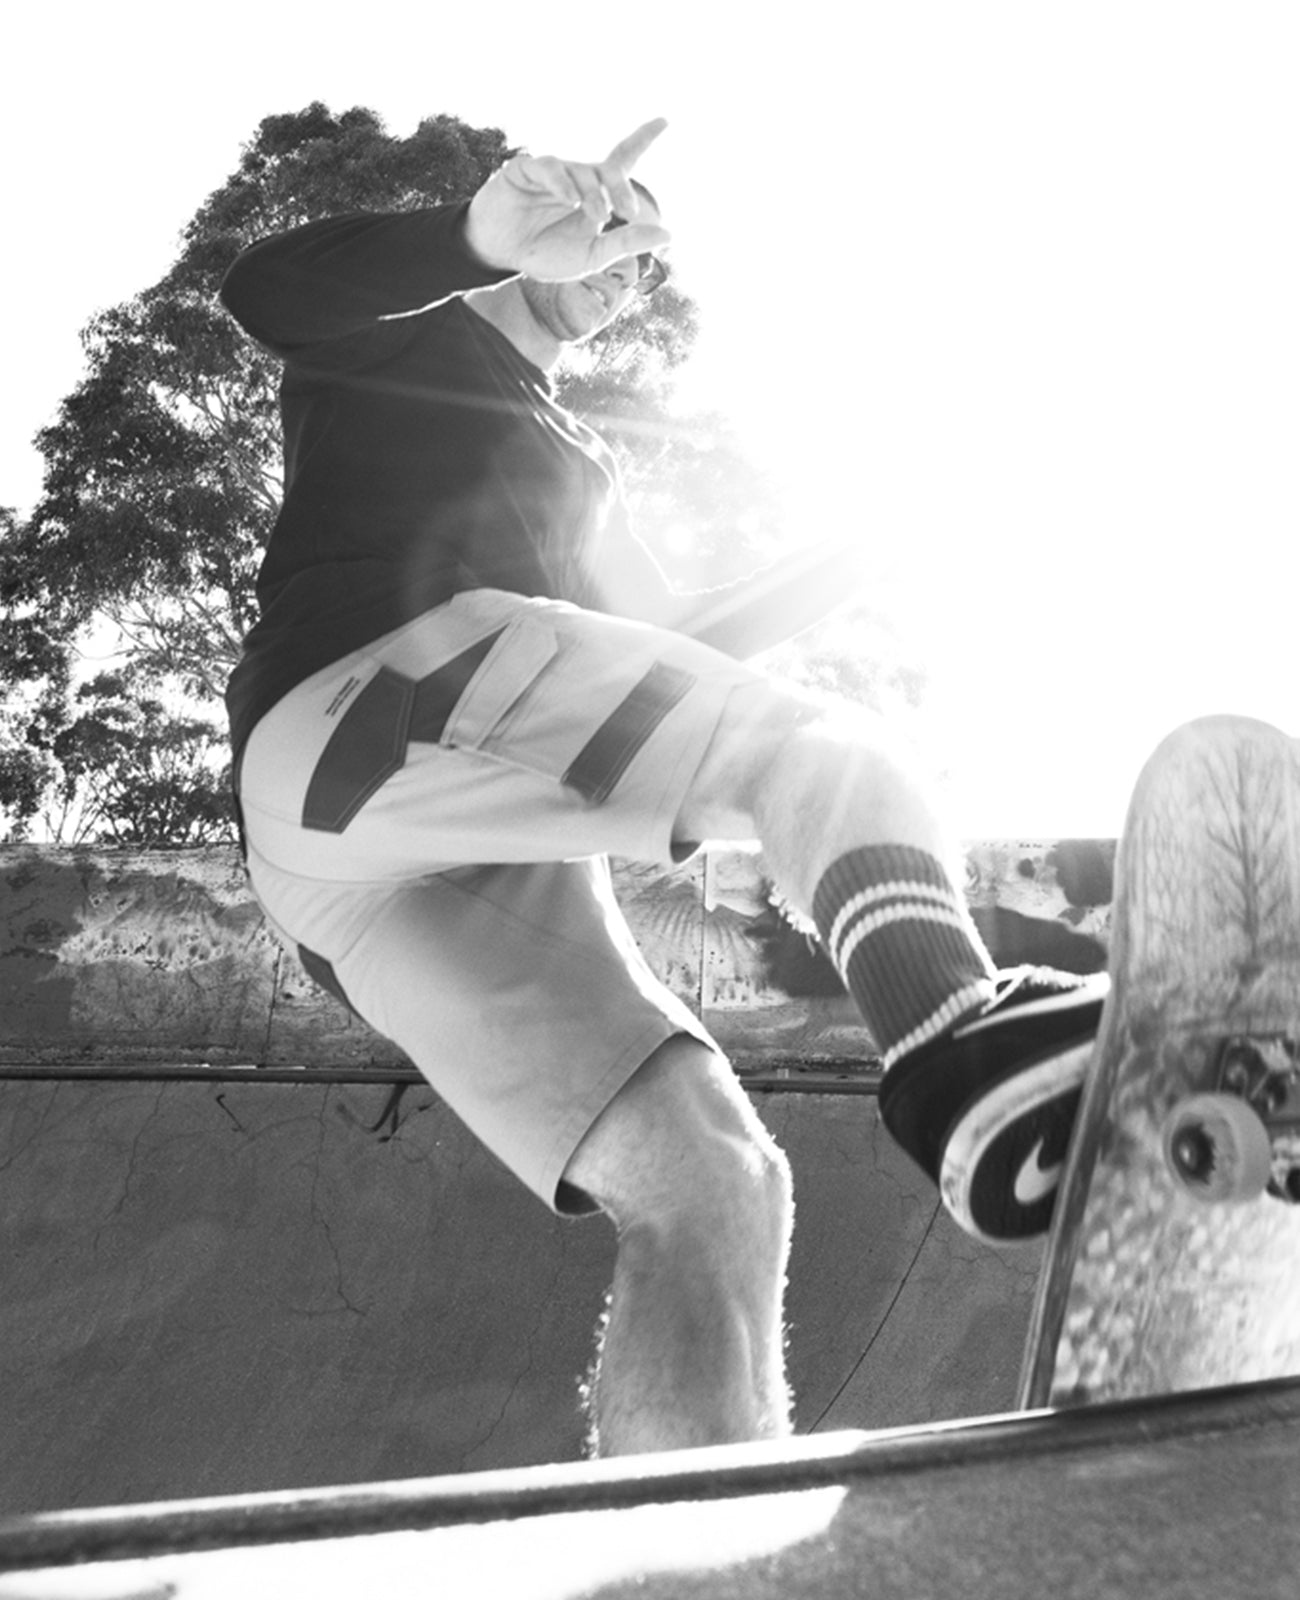 Black and white image of a man skateboarding, wearing a Hard Yakka t-shirt and shorts